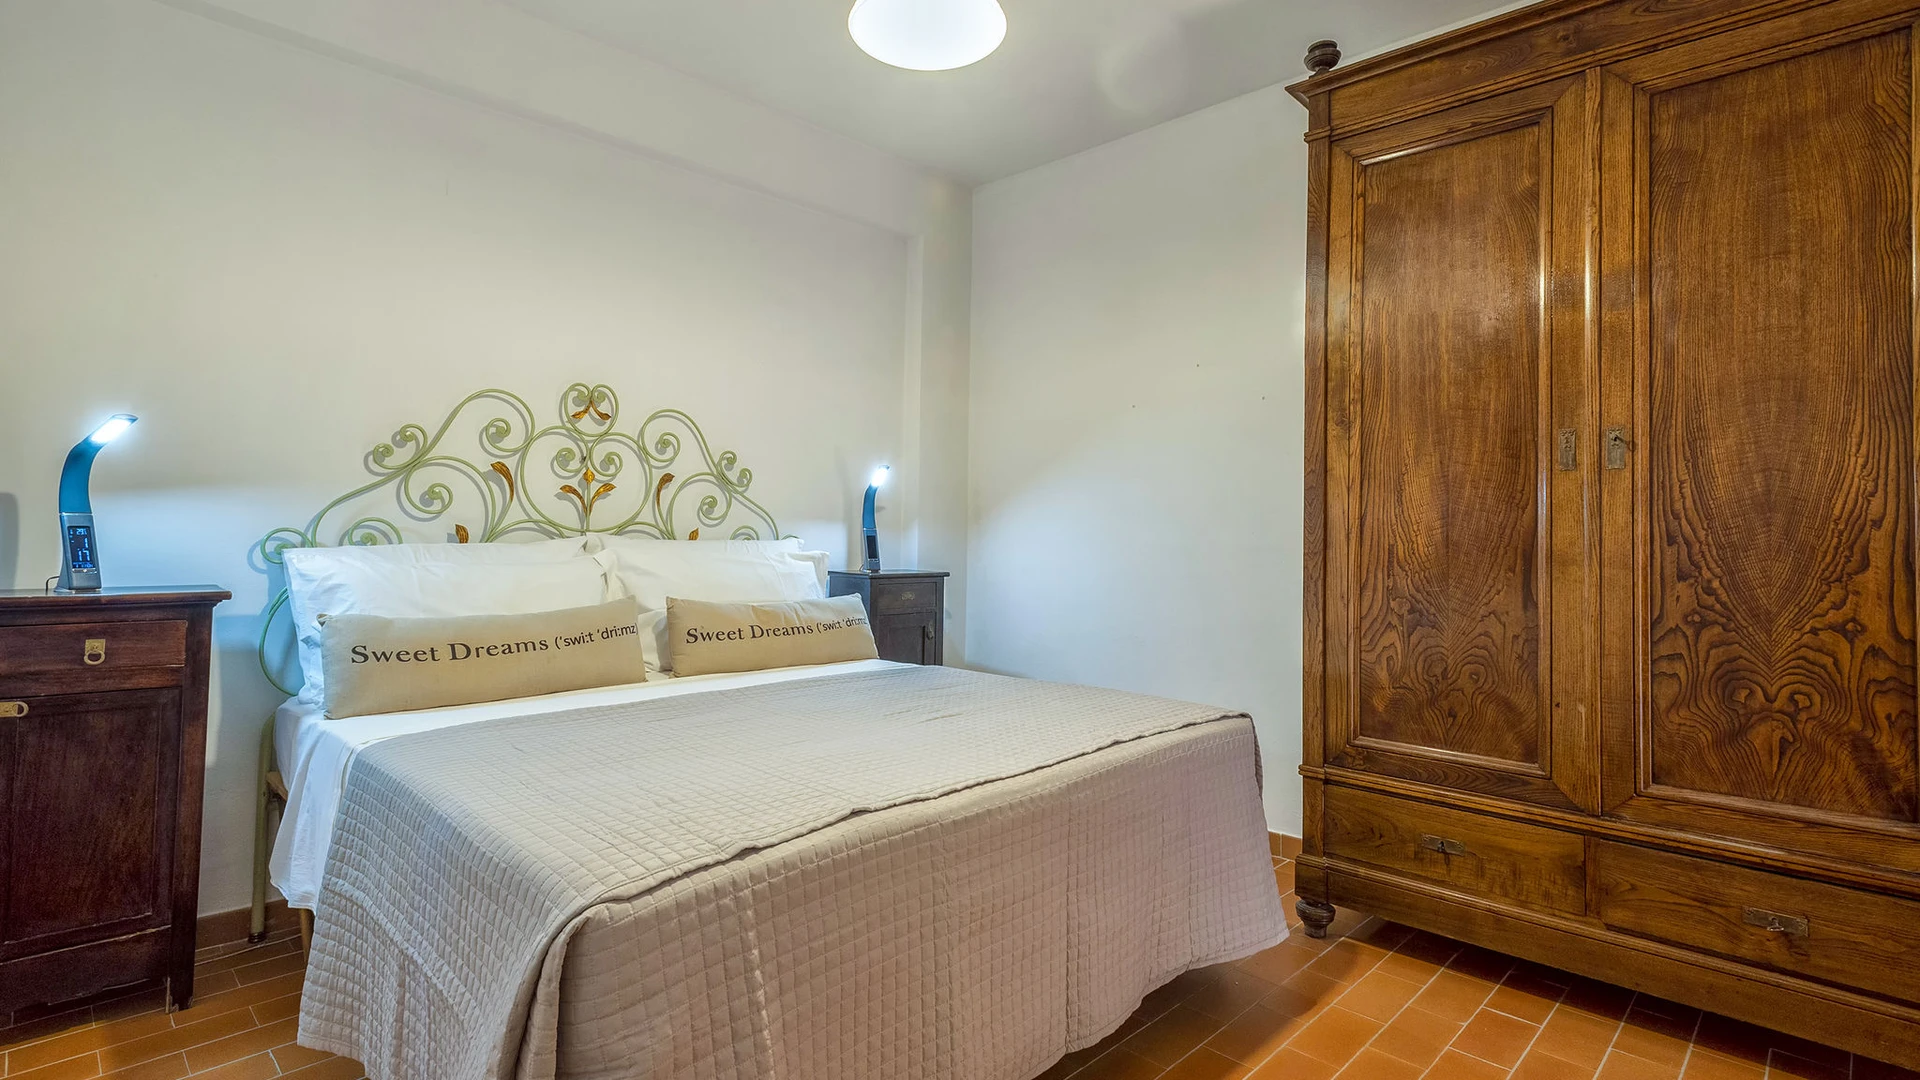 Entire fully furnished flat in L'alguer/alghero